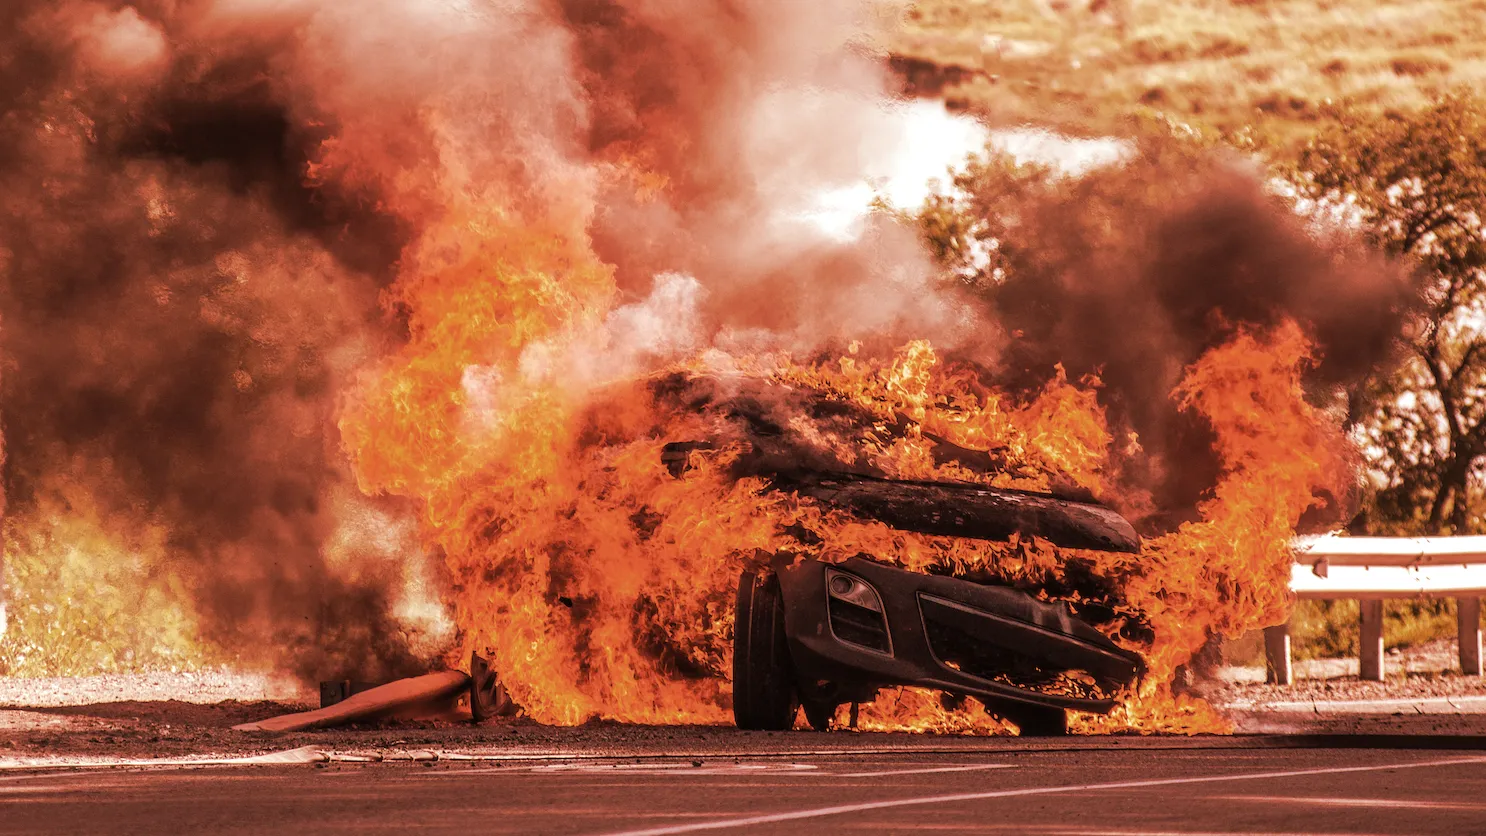 A car on fire. Image: Shutterstock